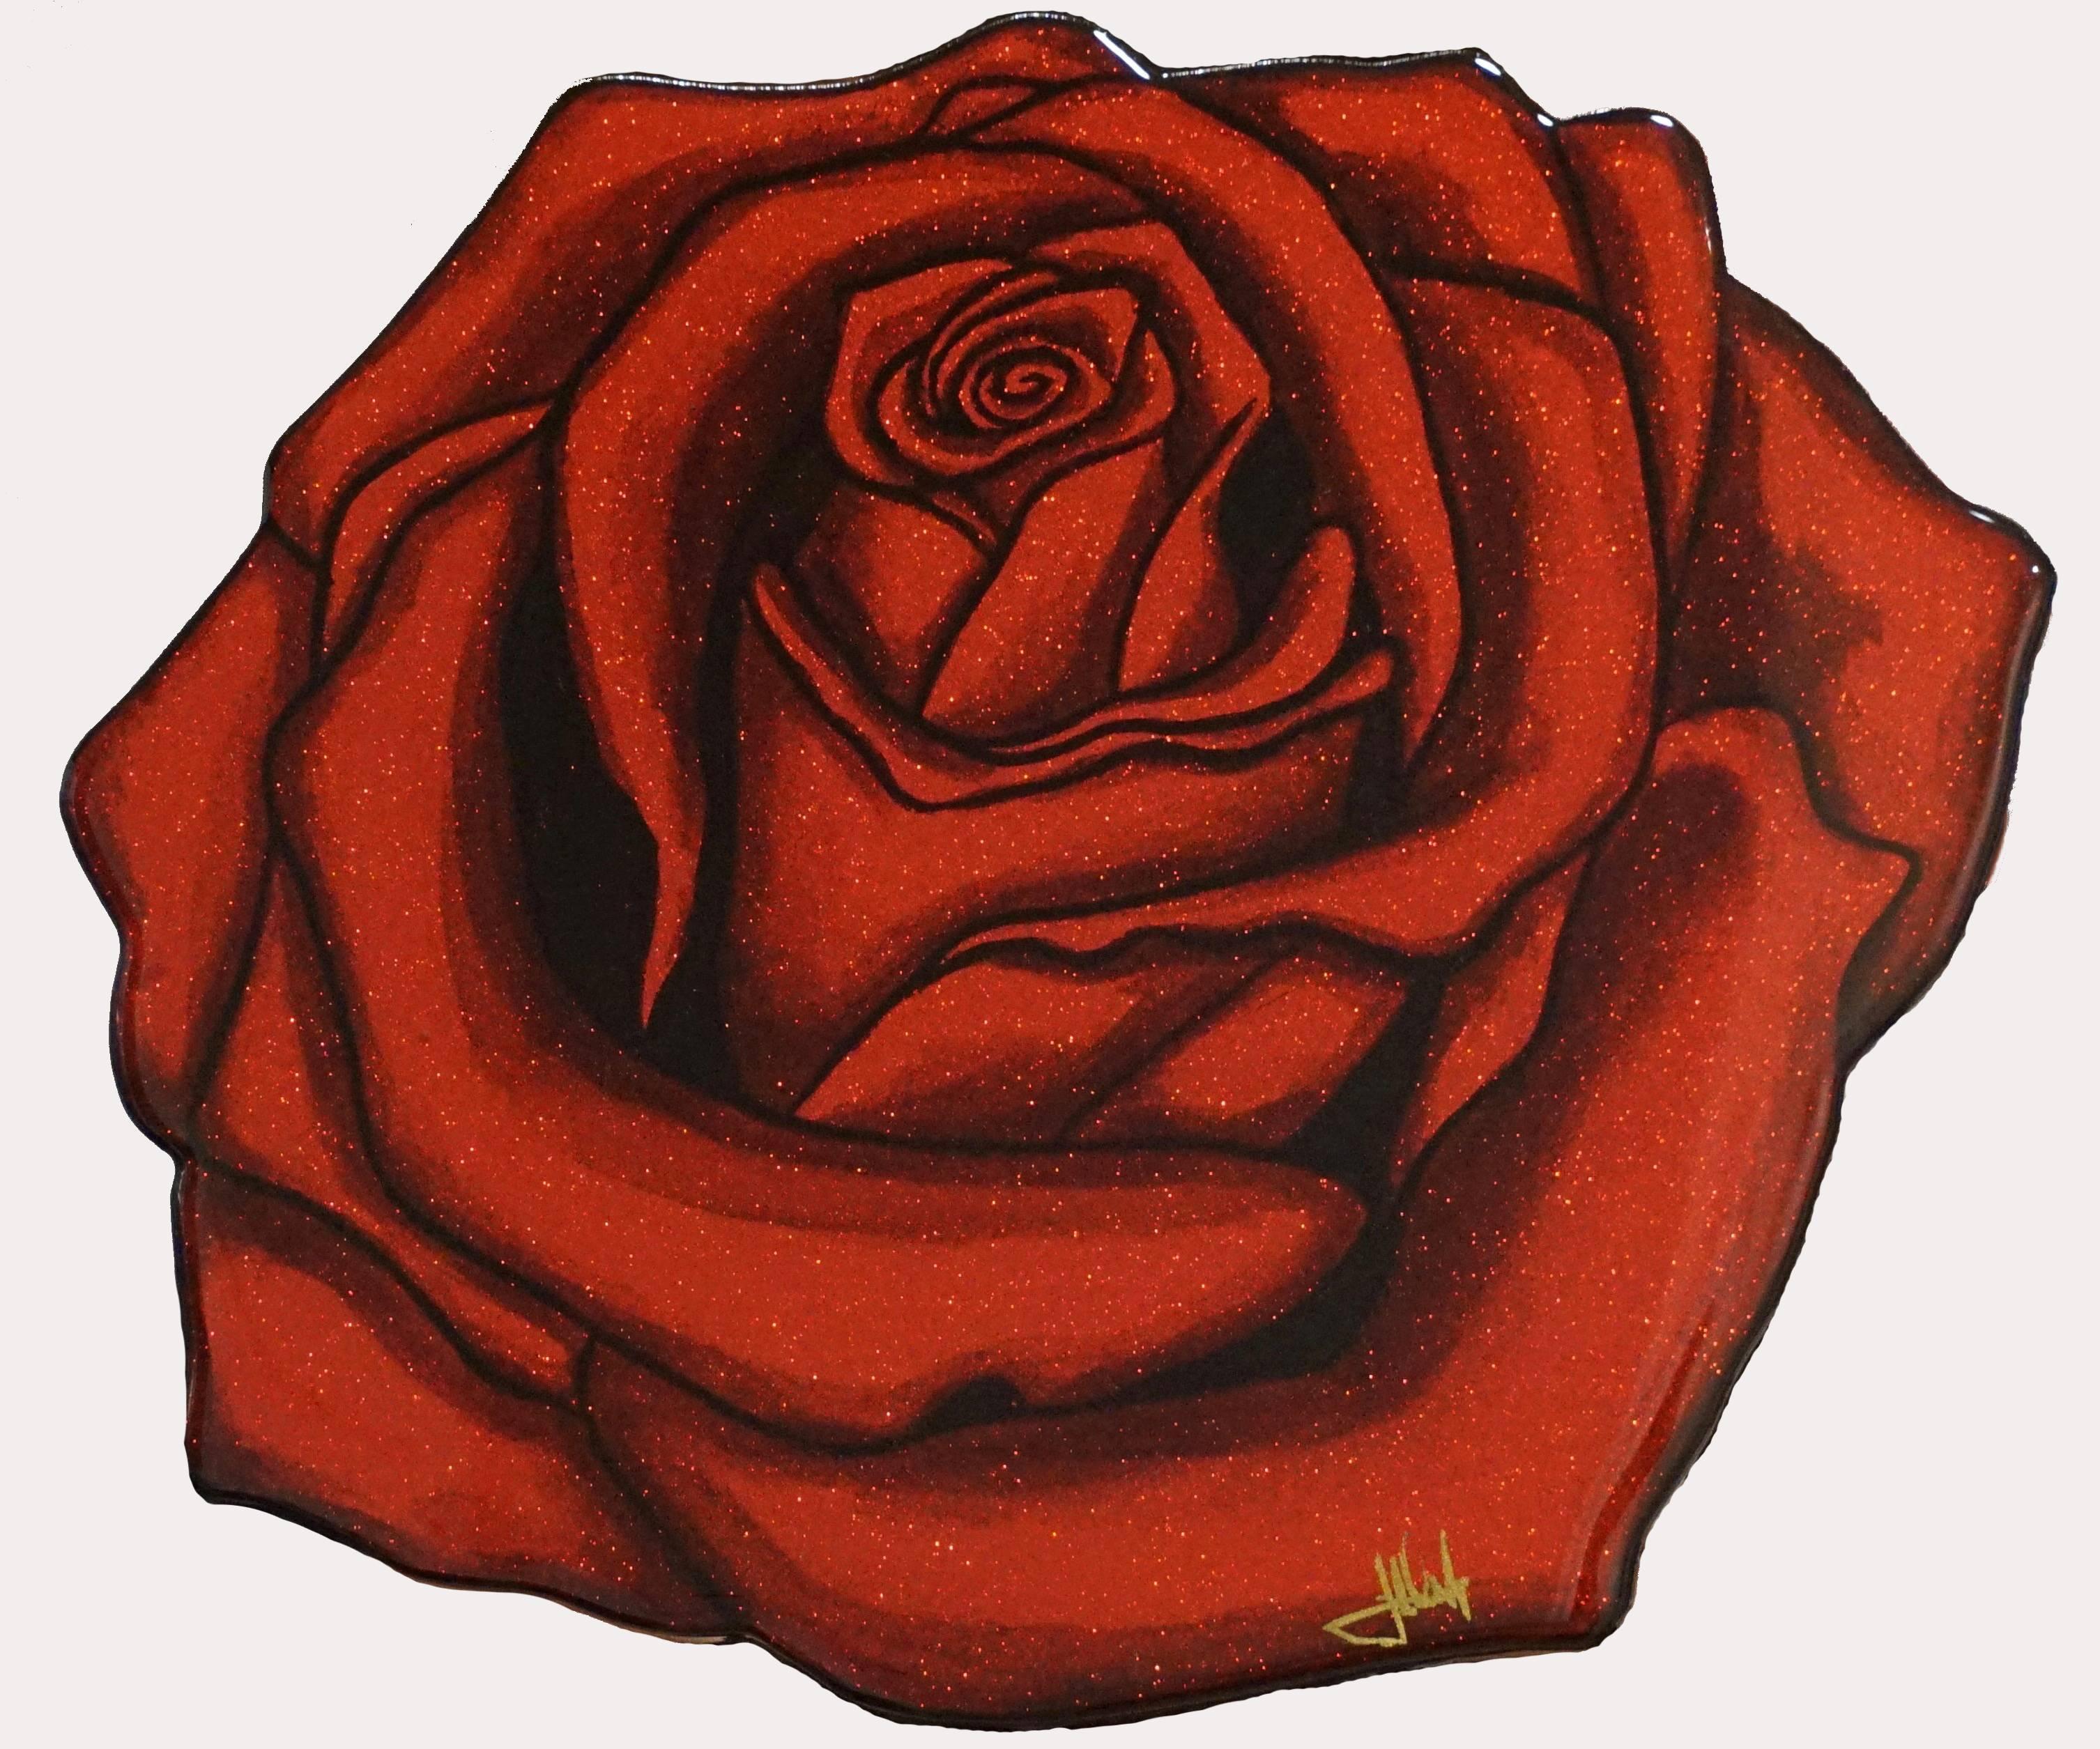 Red Rose - Mixed Media Art by Jenna Morello